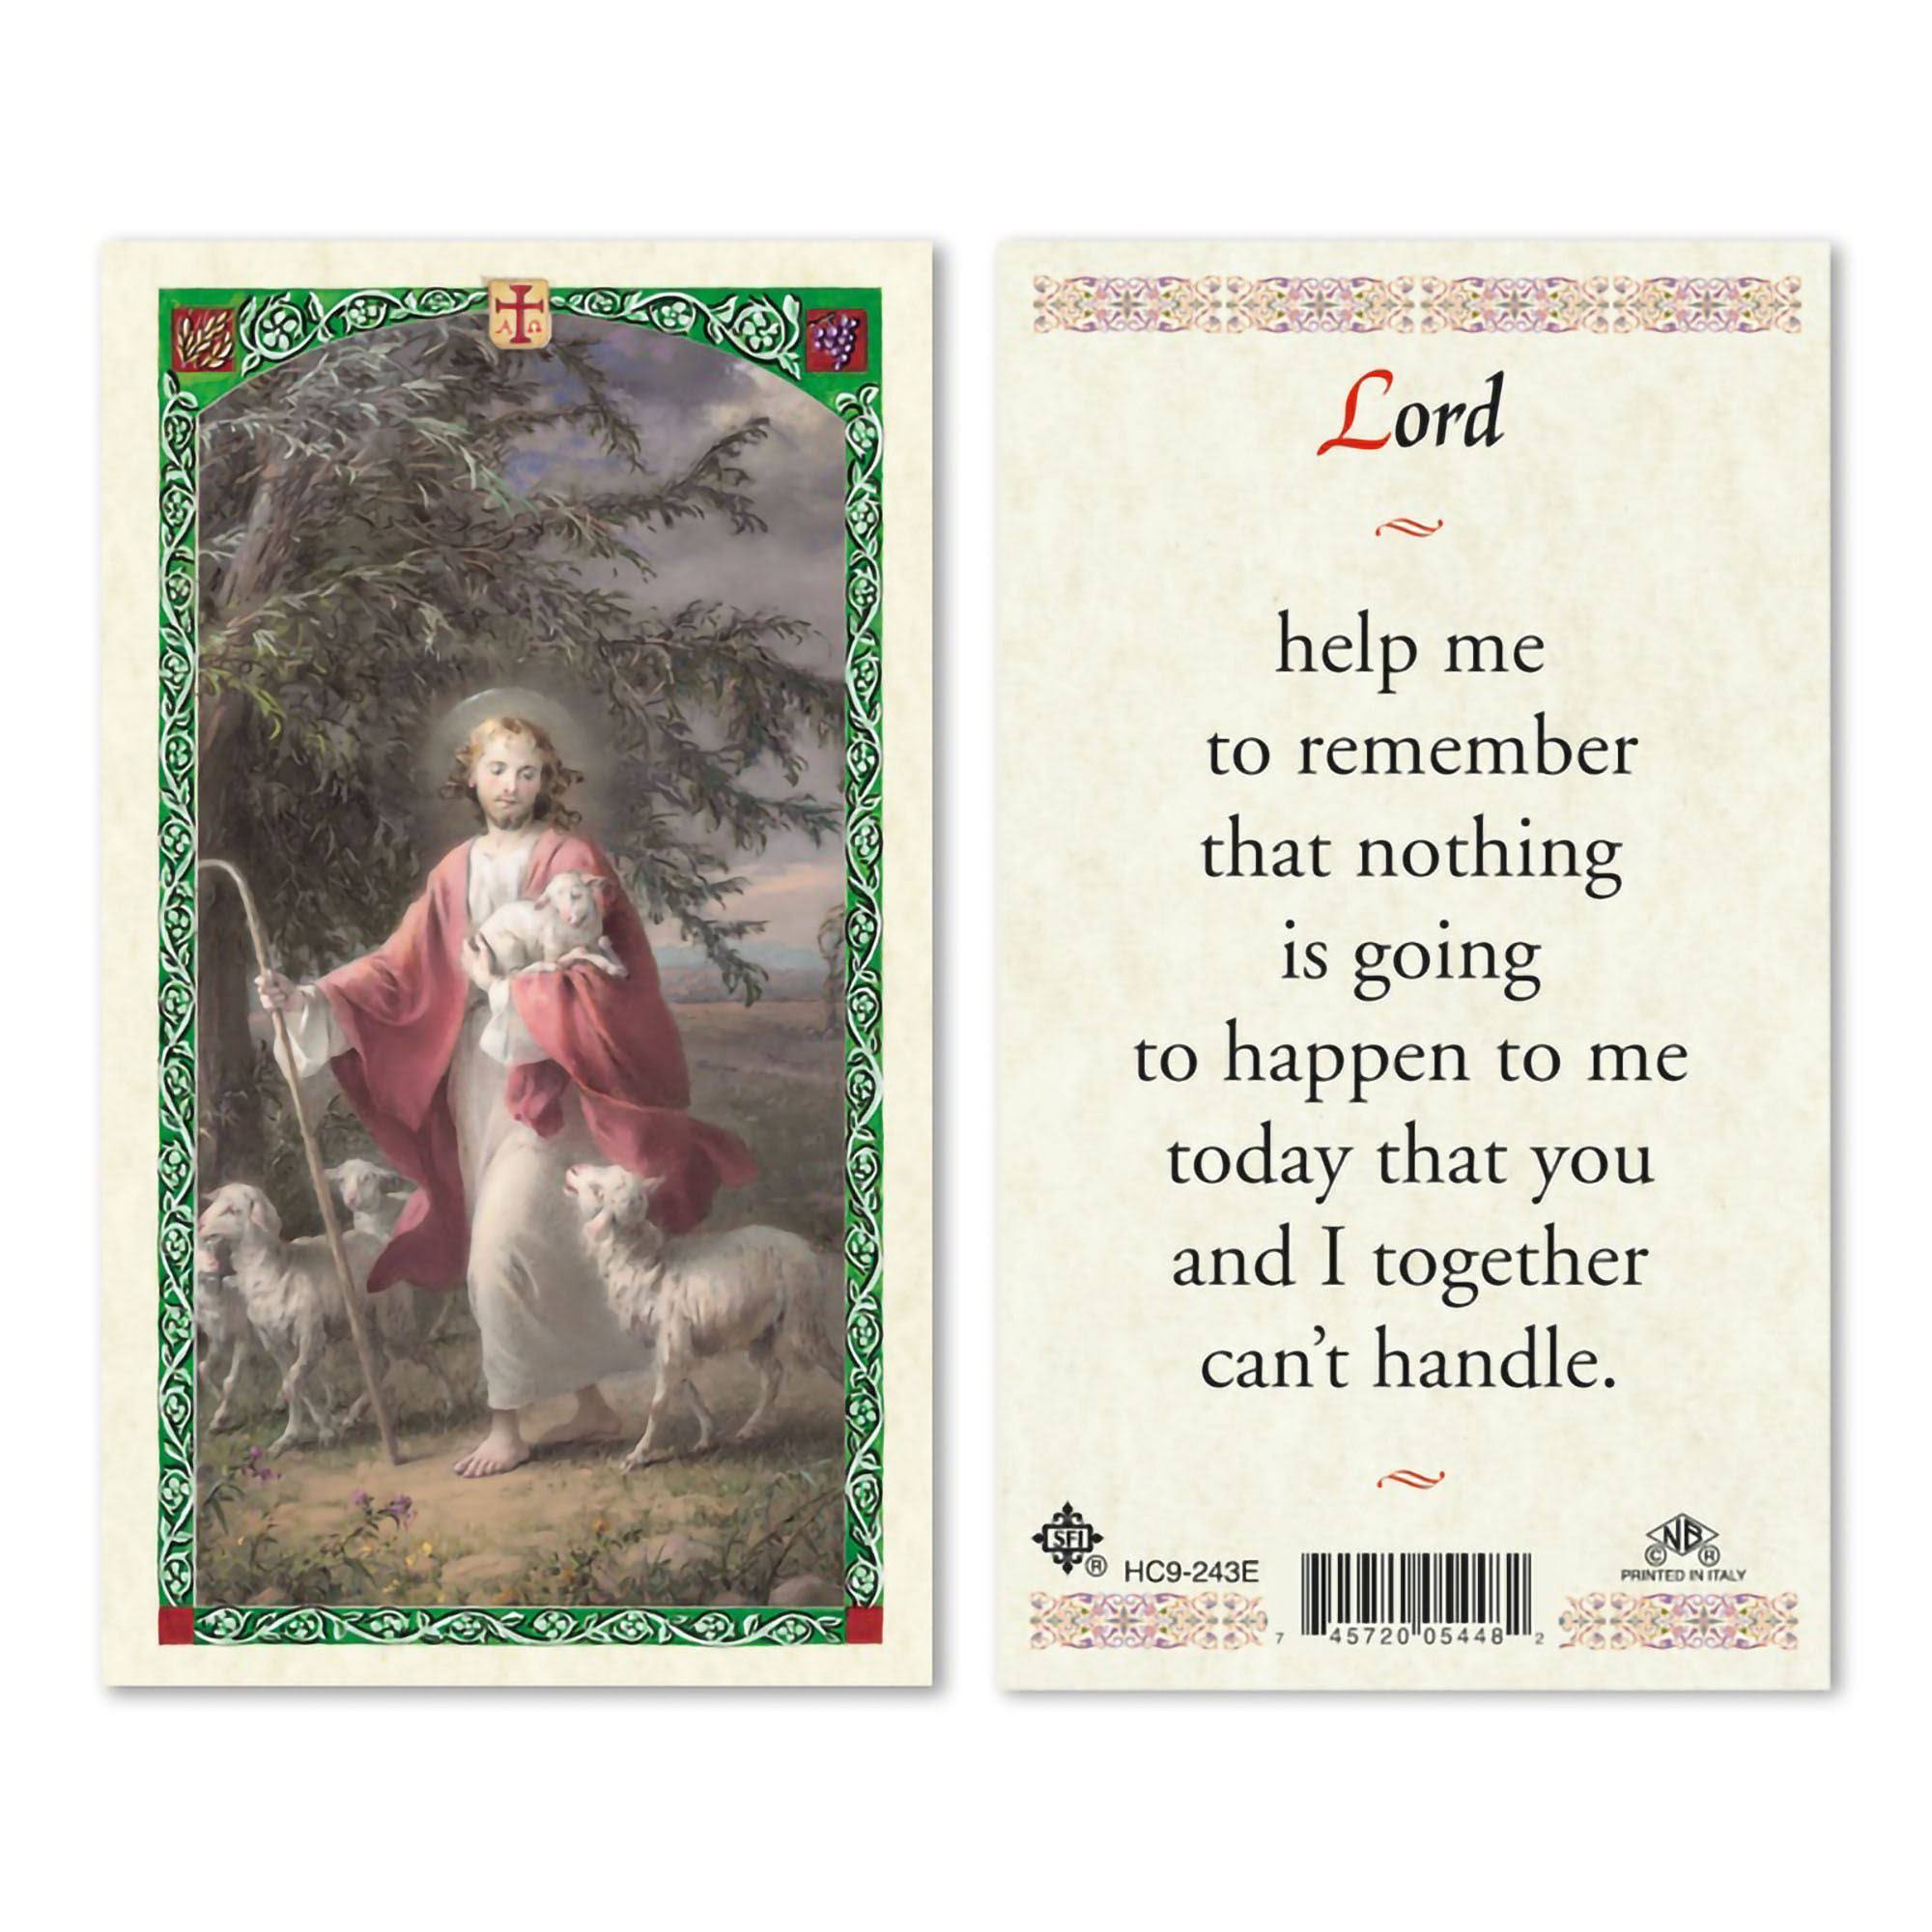 EWTN - Laminated Holy Card - Good Shepherd (Lord)